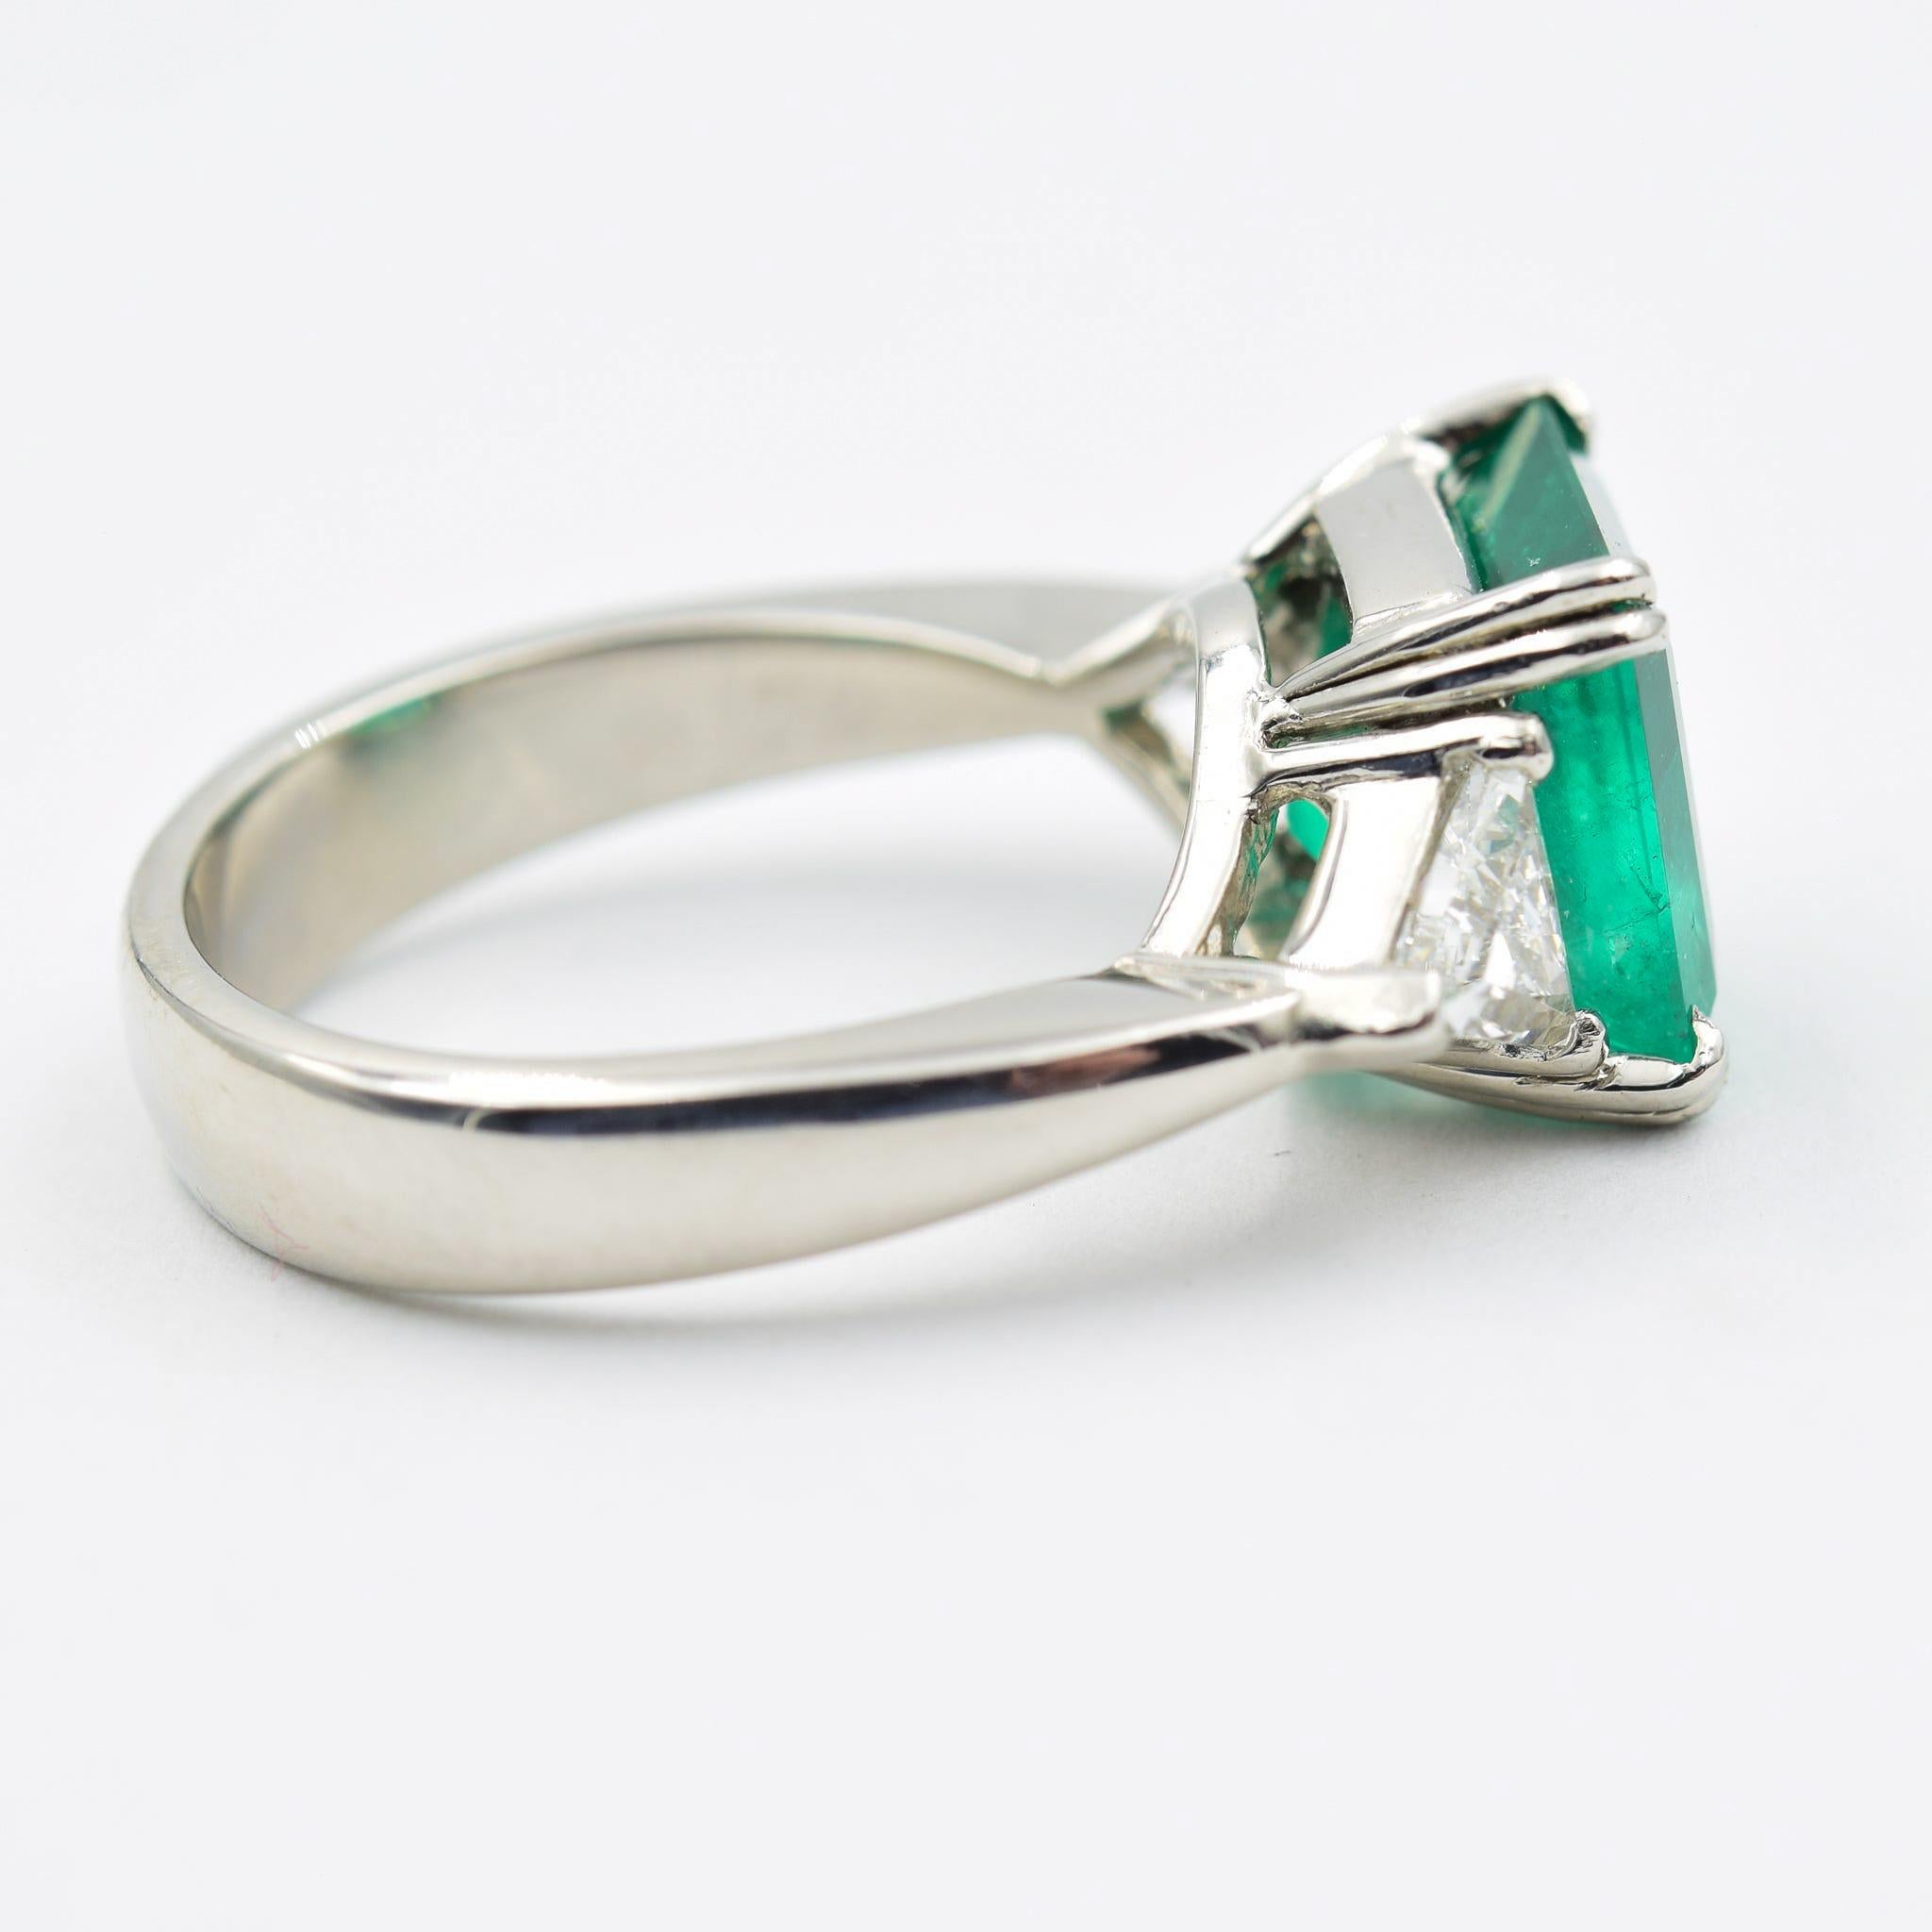 Modern 3.70 Carat Emerald & Diamond Ring in Platinum with Trillion Cut Sides